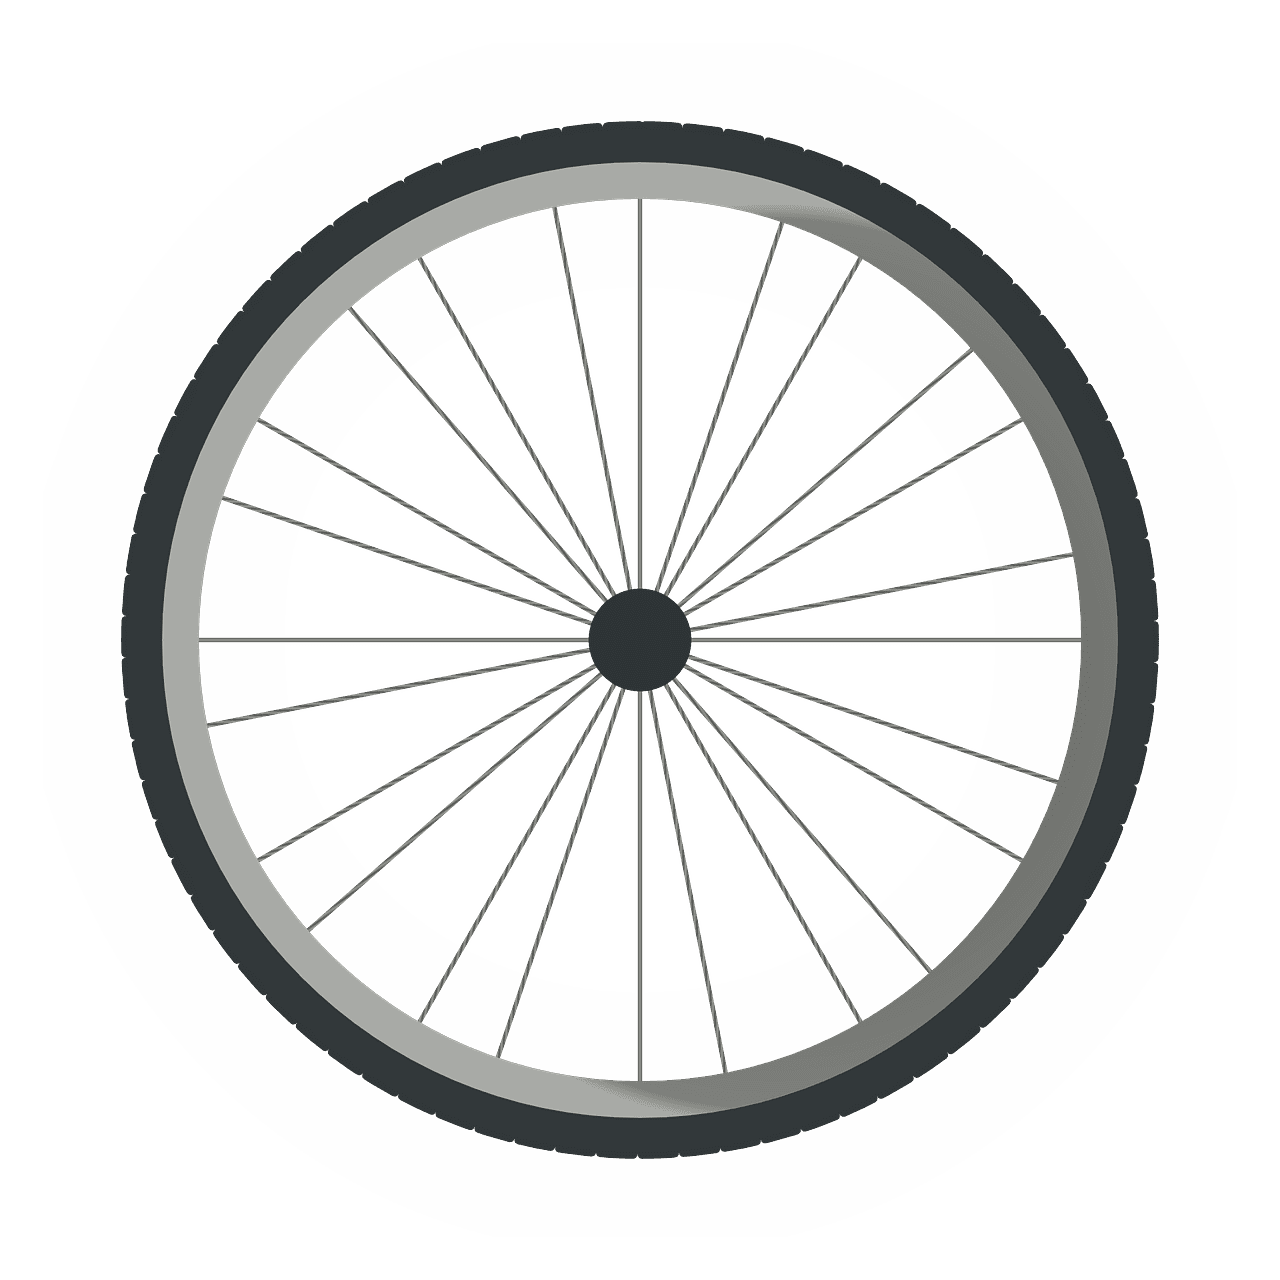 Bike Wheel